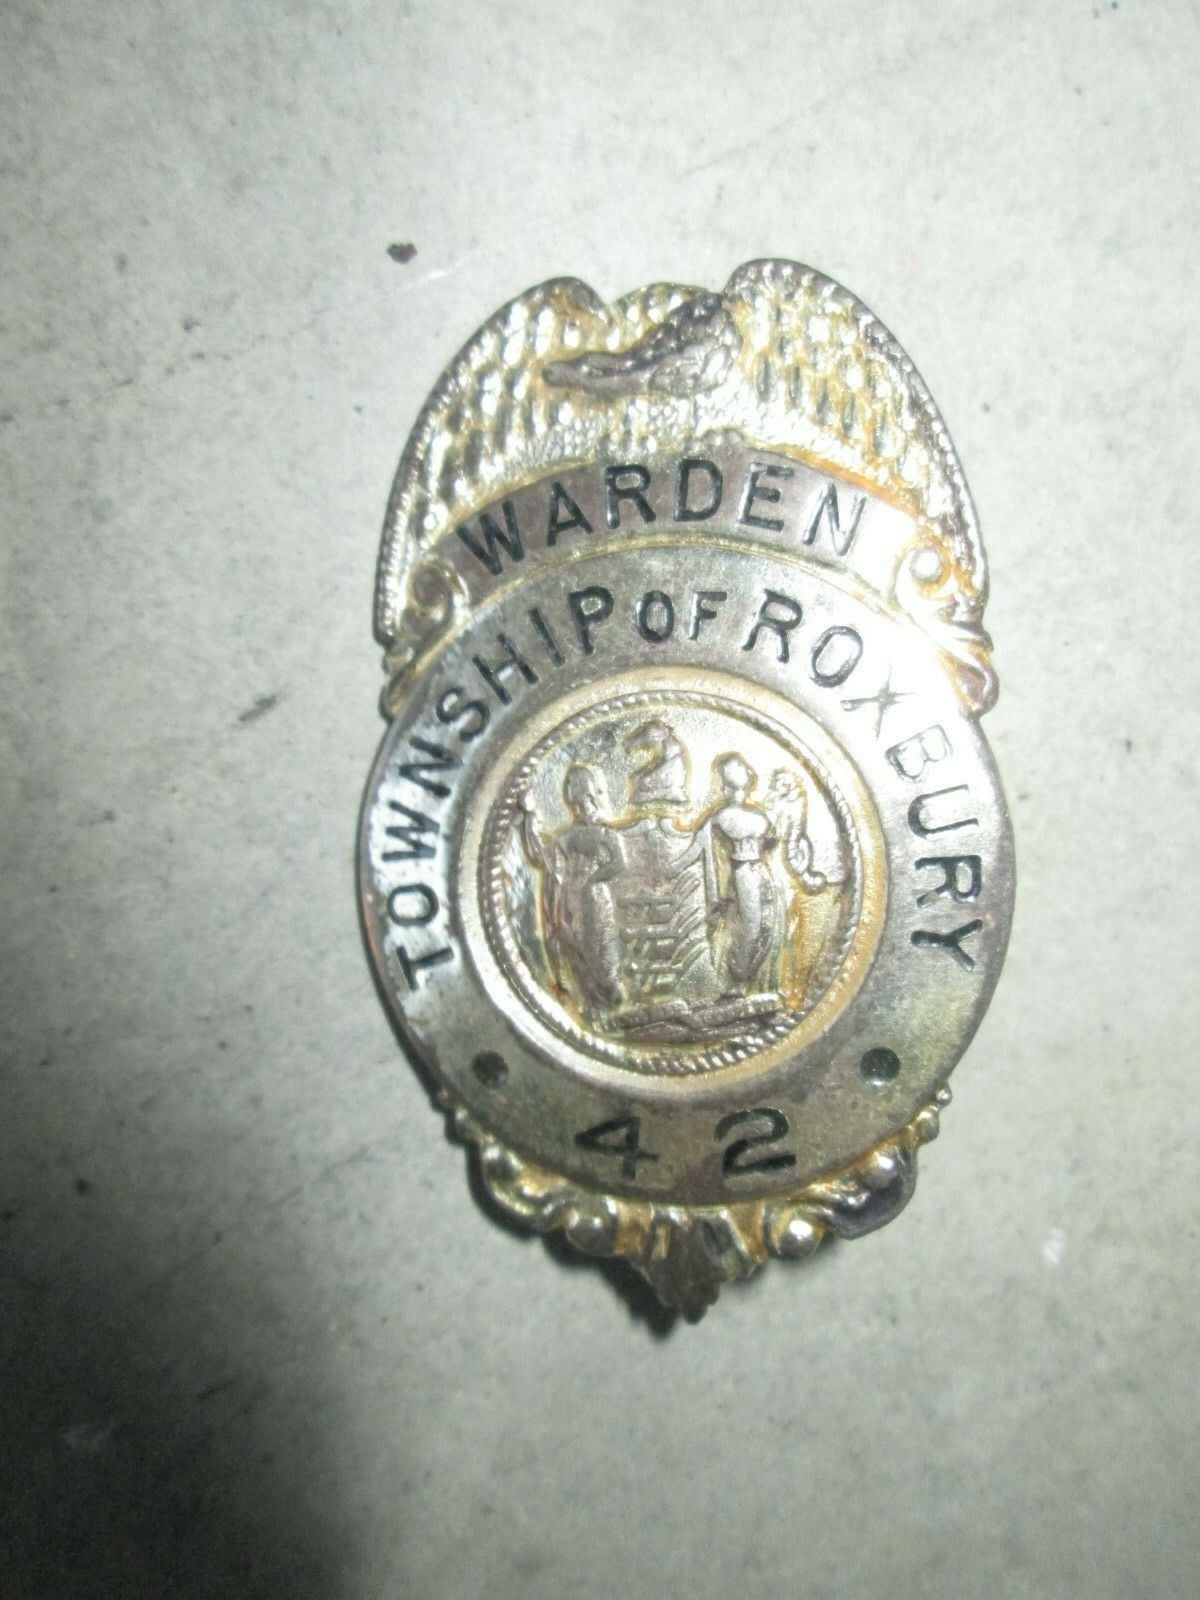 OBSOLETE Antique Township of Roxbury Warden Badge c.1910 w LOW #42 EXCELLENT